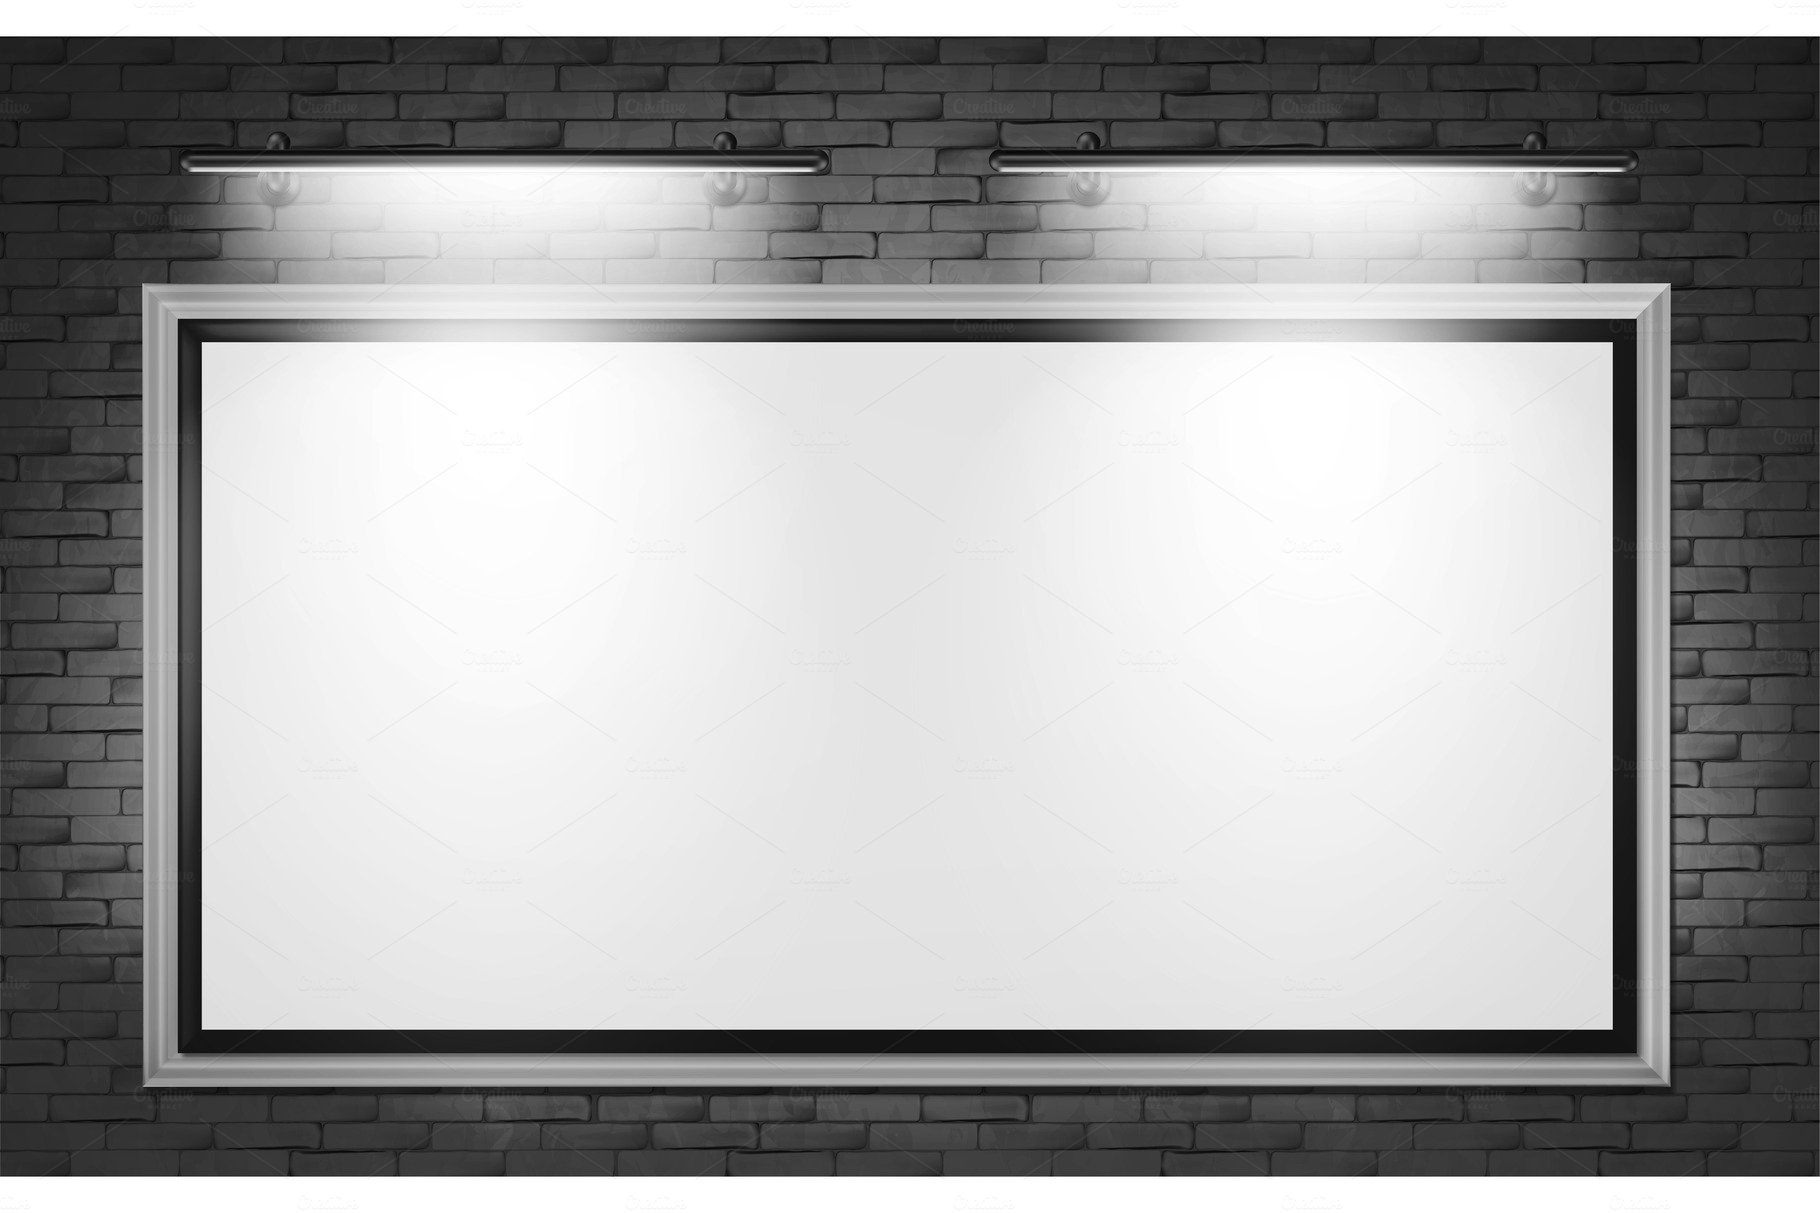 Blank billboard display on brick cover image.